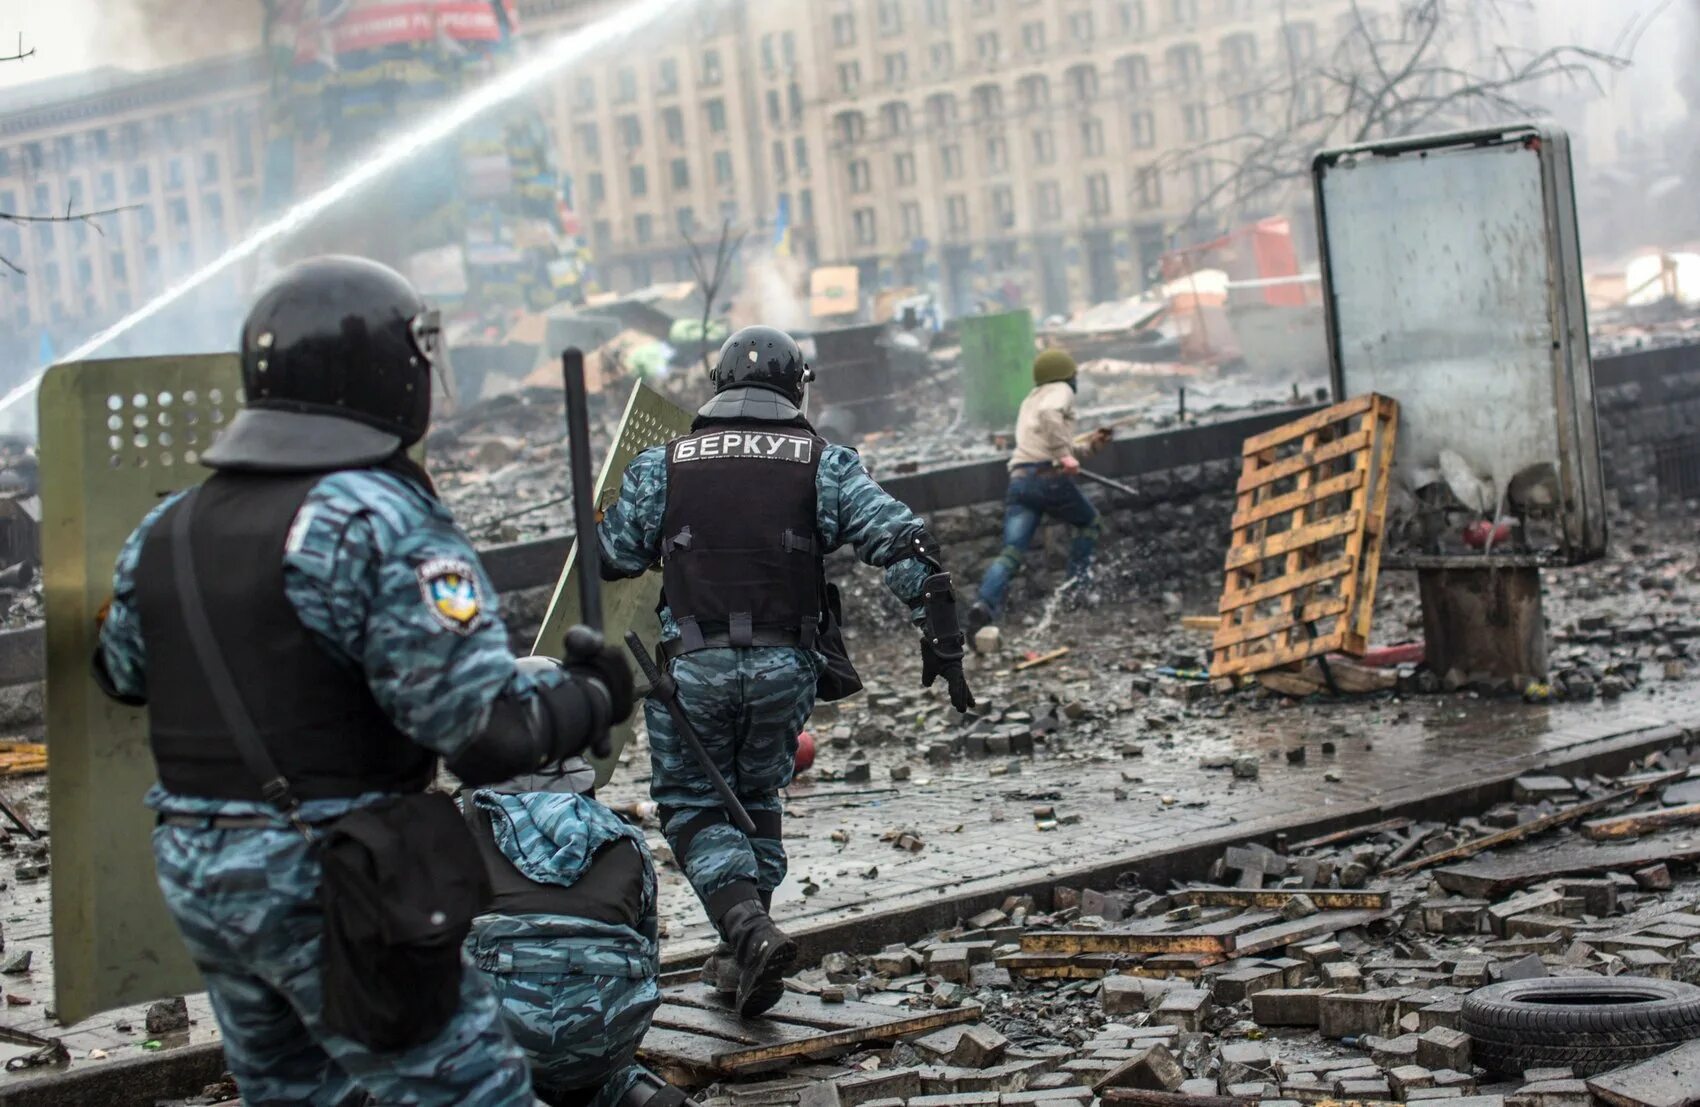 Беркут Украина Майдан на Украине в 2014. Евромайдан на Украине в 2014 Беркут. Беркутовцы на майдане